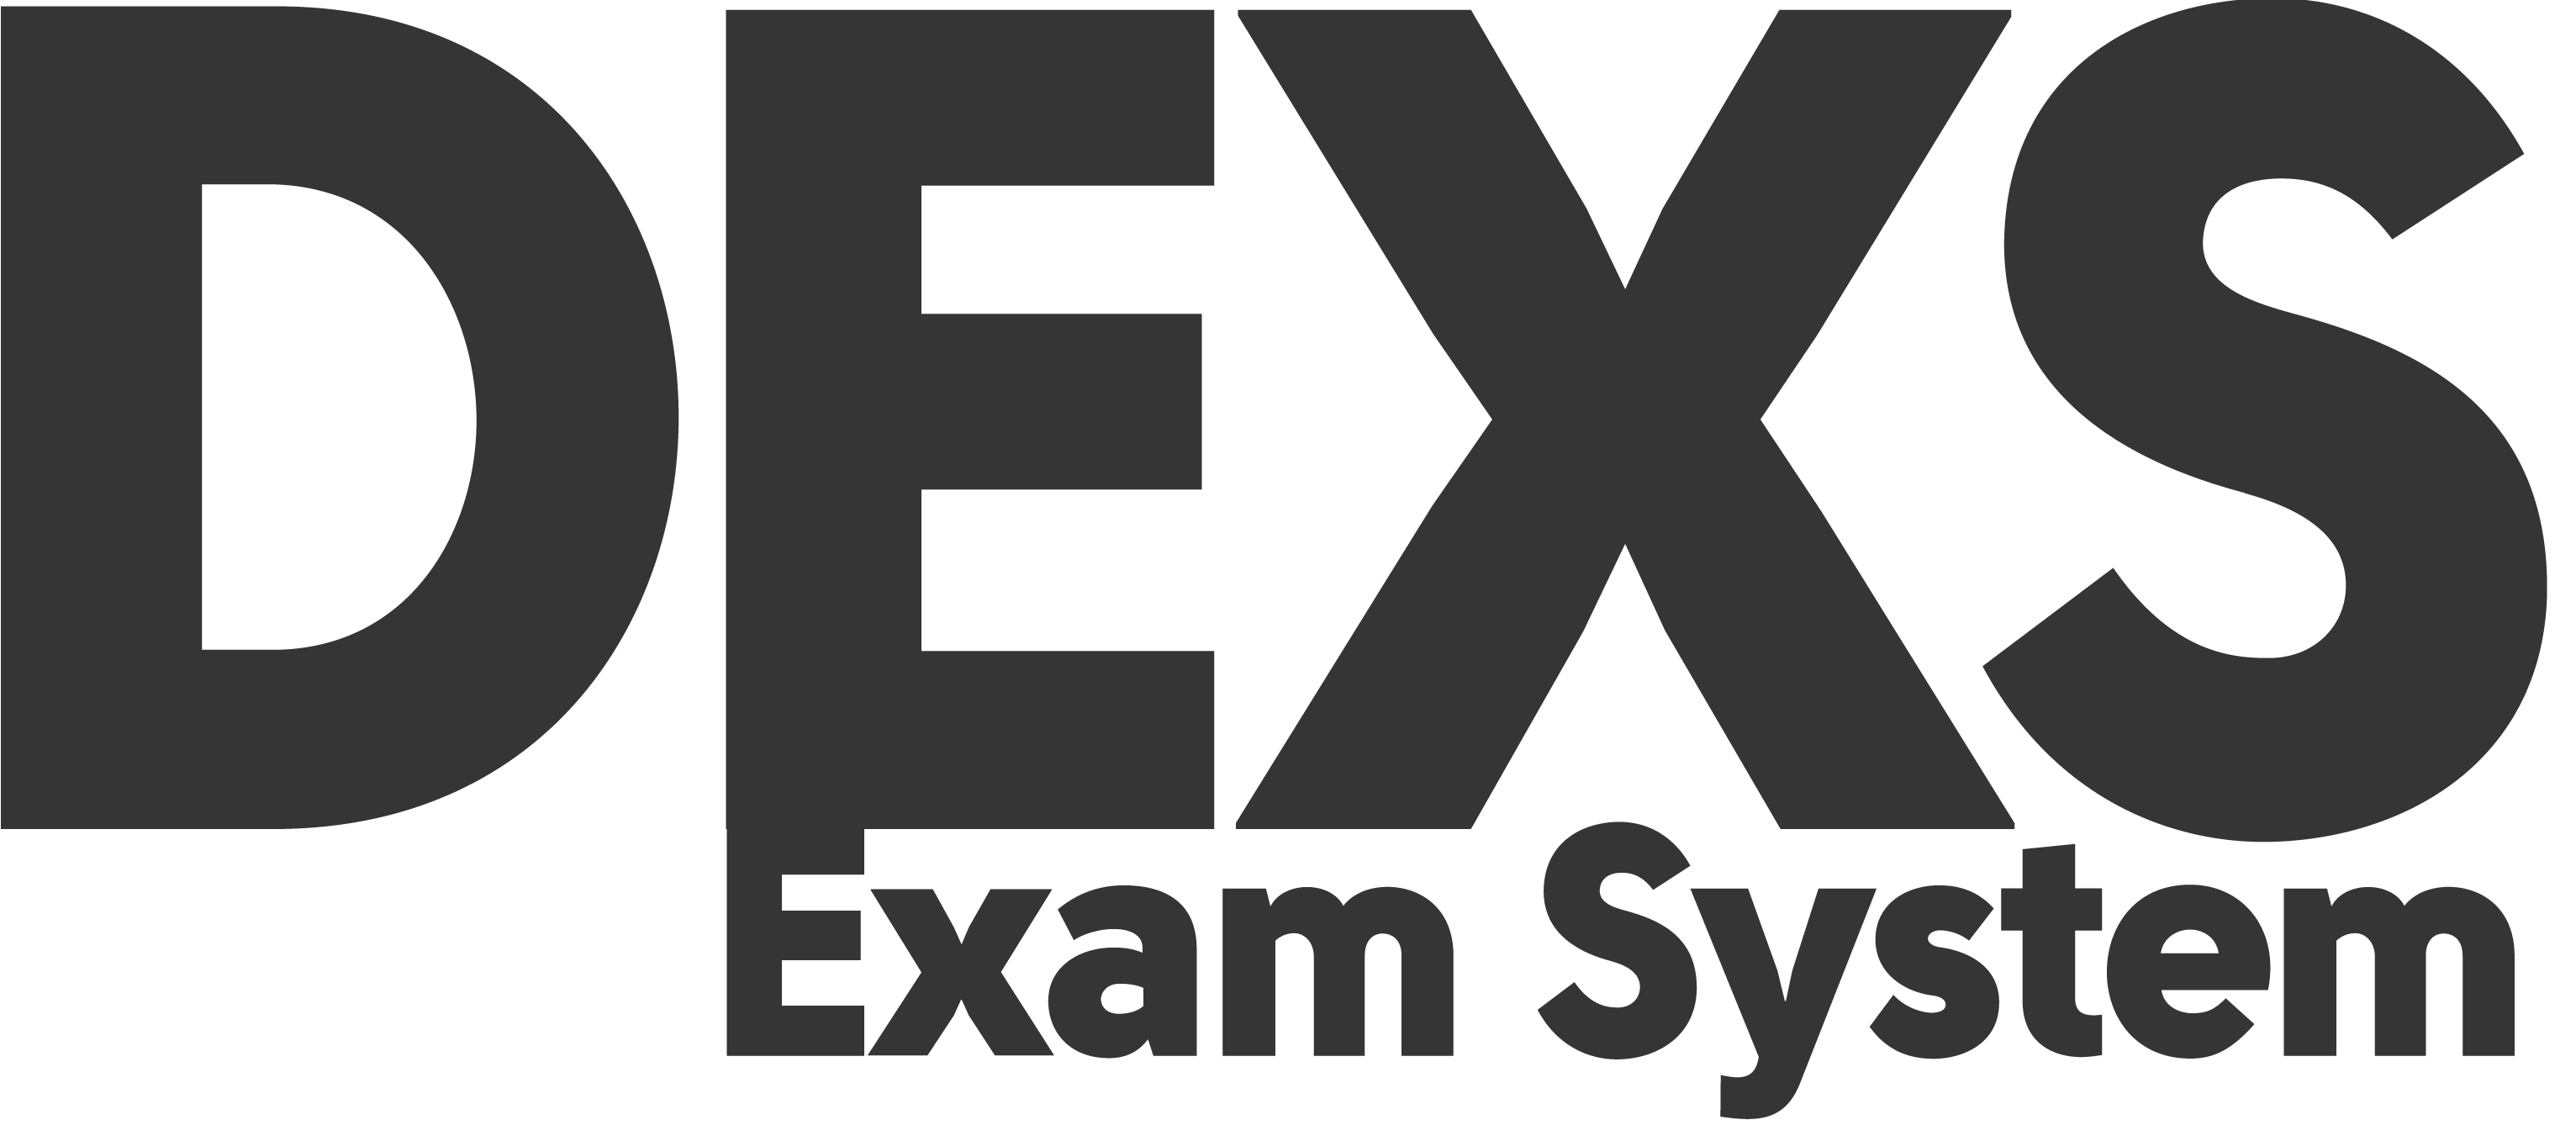 DEXS Exam Management System